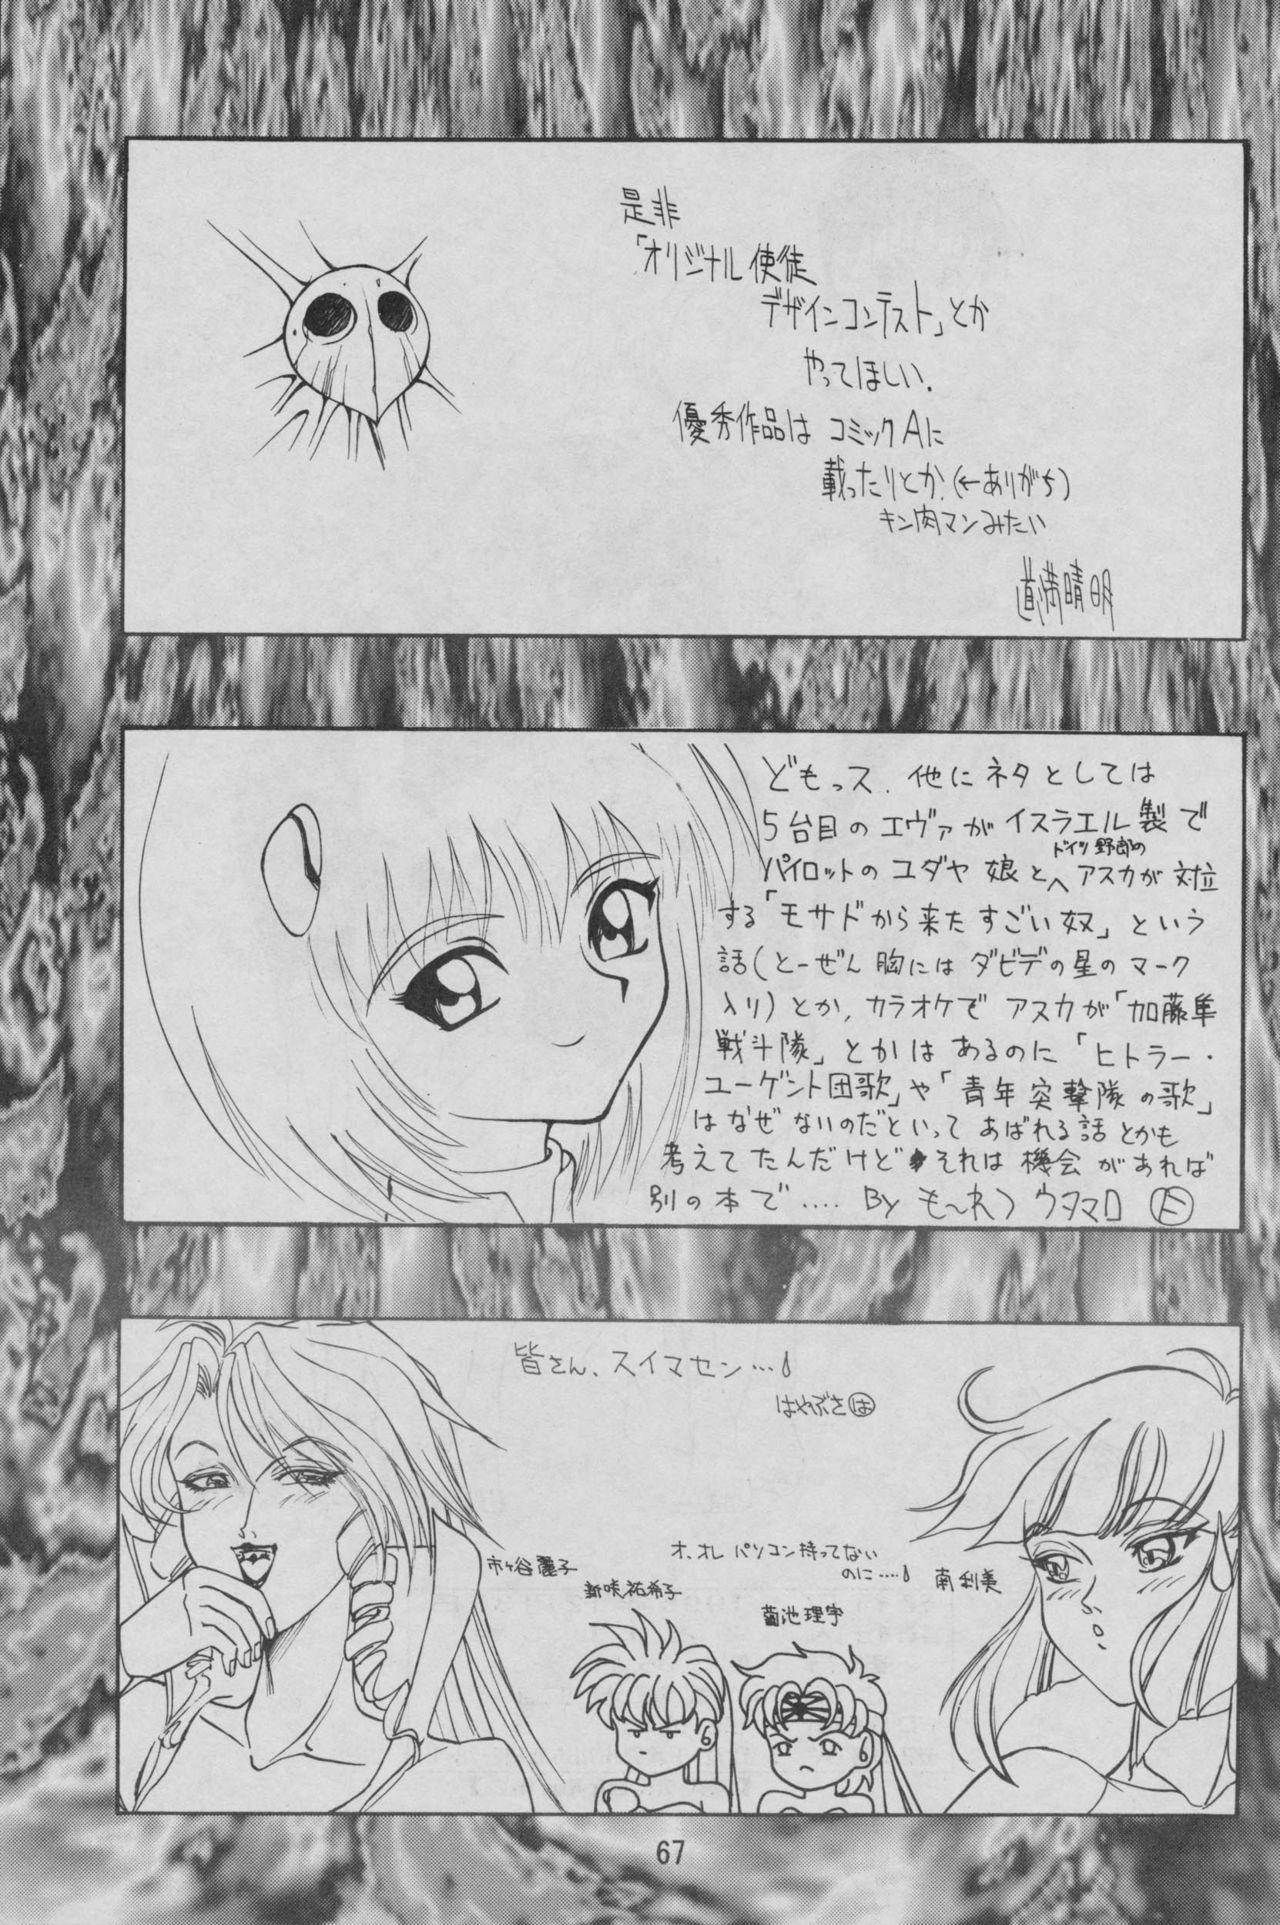 Perrito Comic Dengeki Inuoh - Neon genesis evangelion Mobile suit gundam Gundam zz G gundam Gundam wing Camporn - Page 69